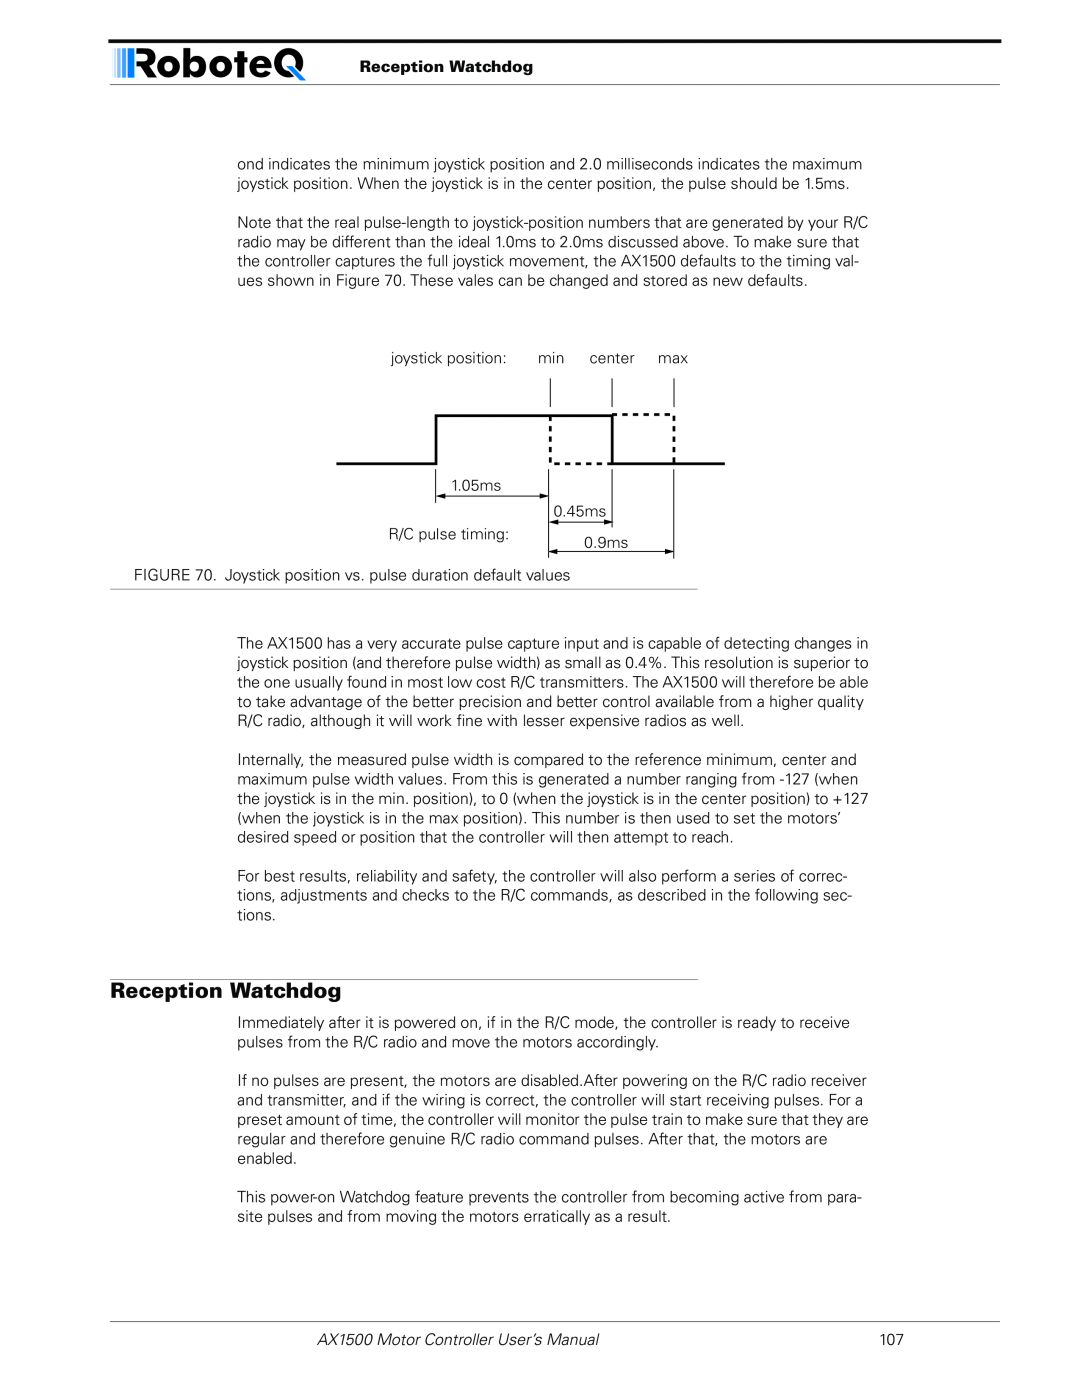 RoboteQ AX2550 user manual Reception Watchdog, AX1500 Motor Controller User’s Manual 